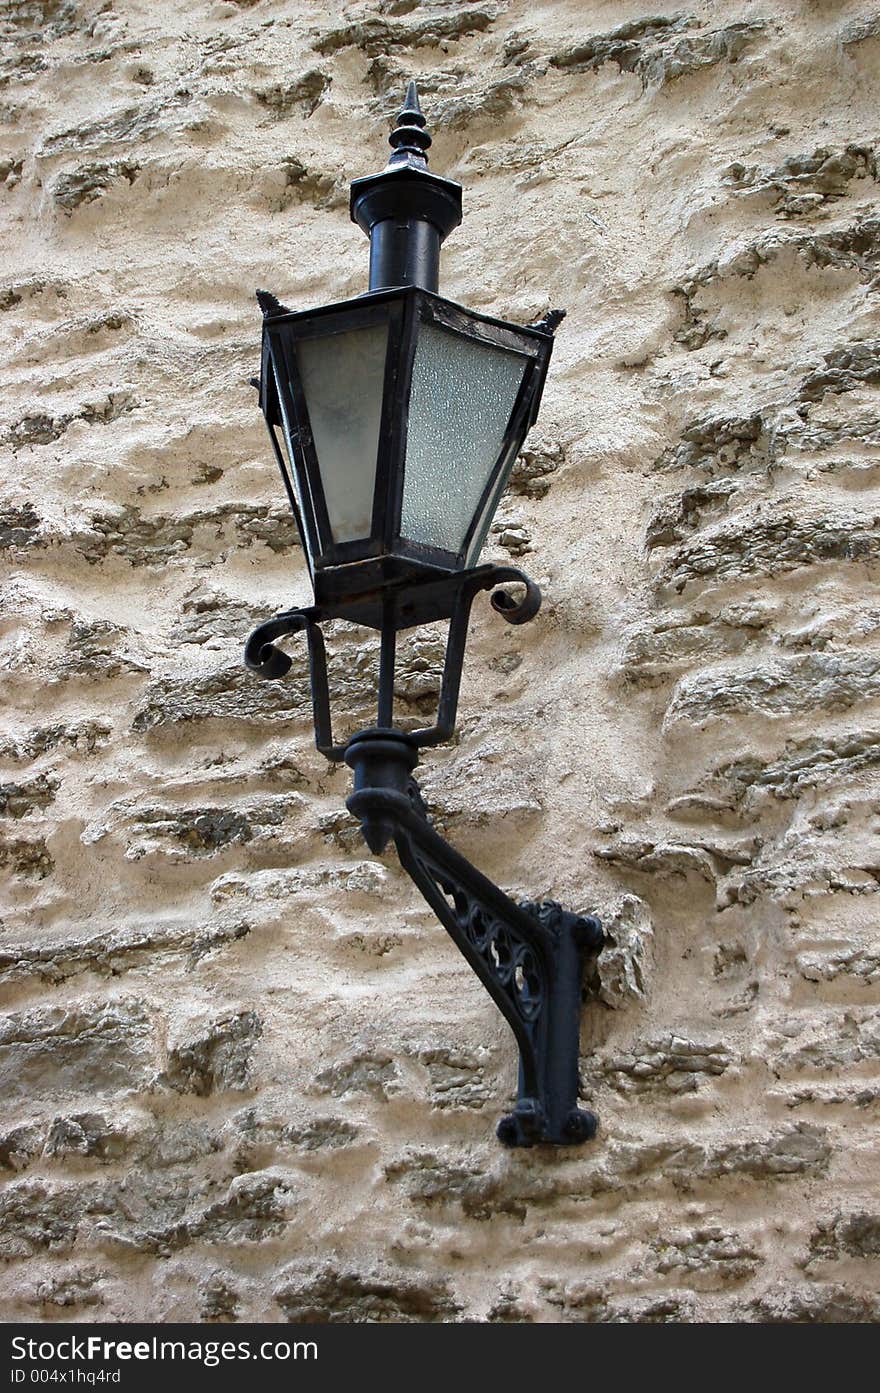 Old street lamp